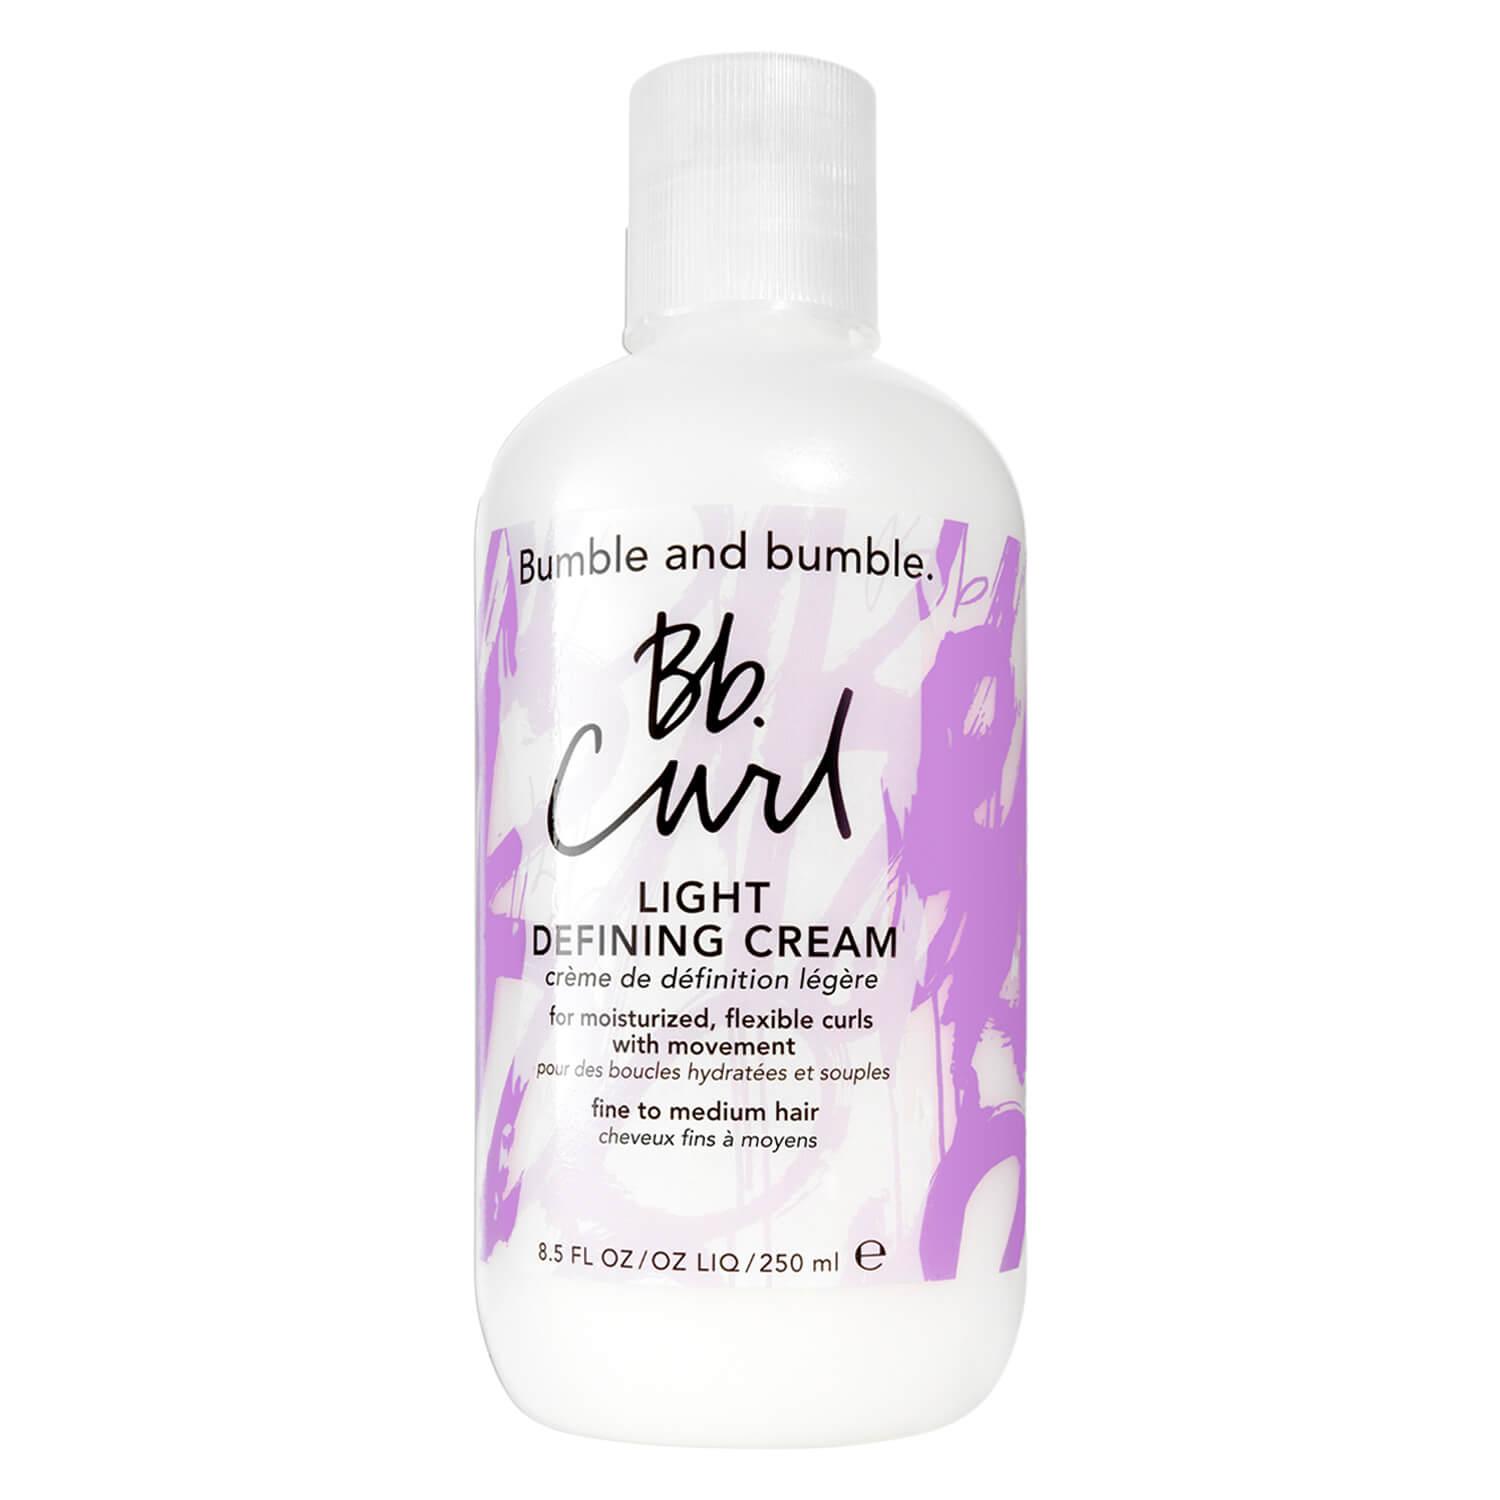 Bb. Curl Defining Cream Light